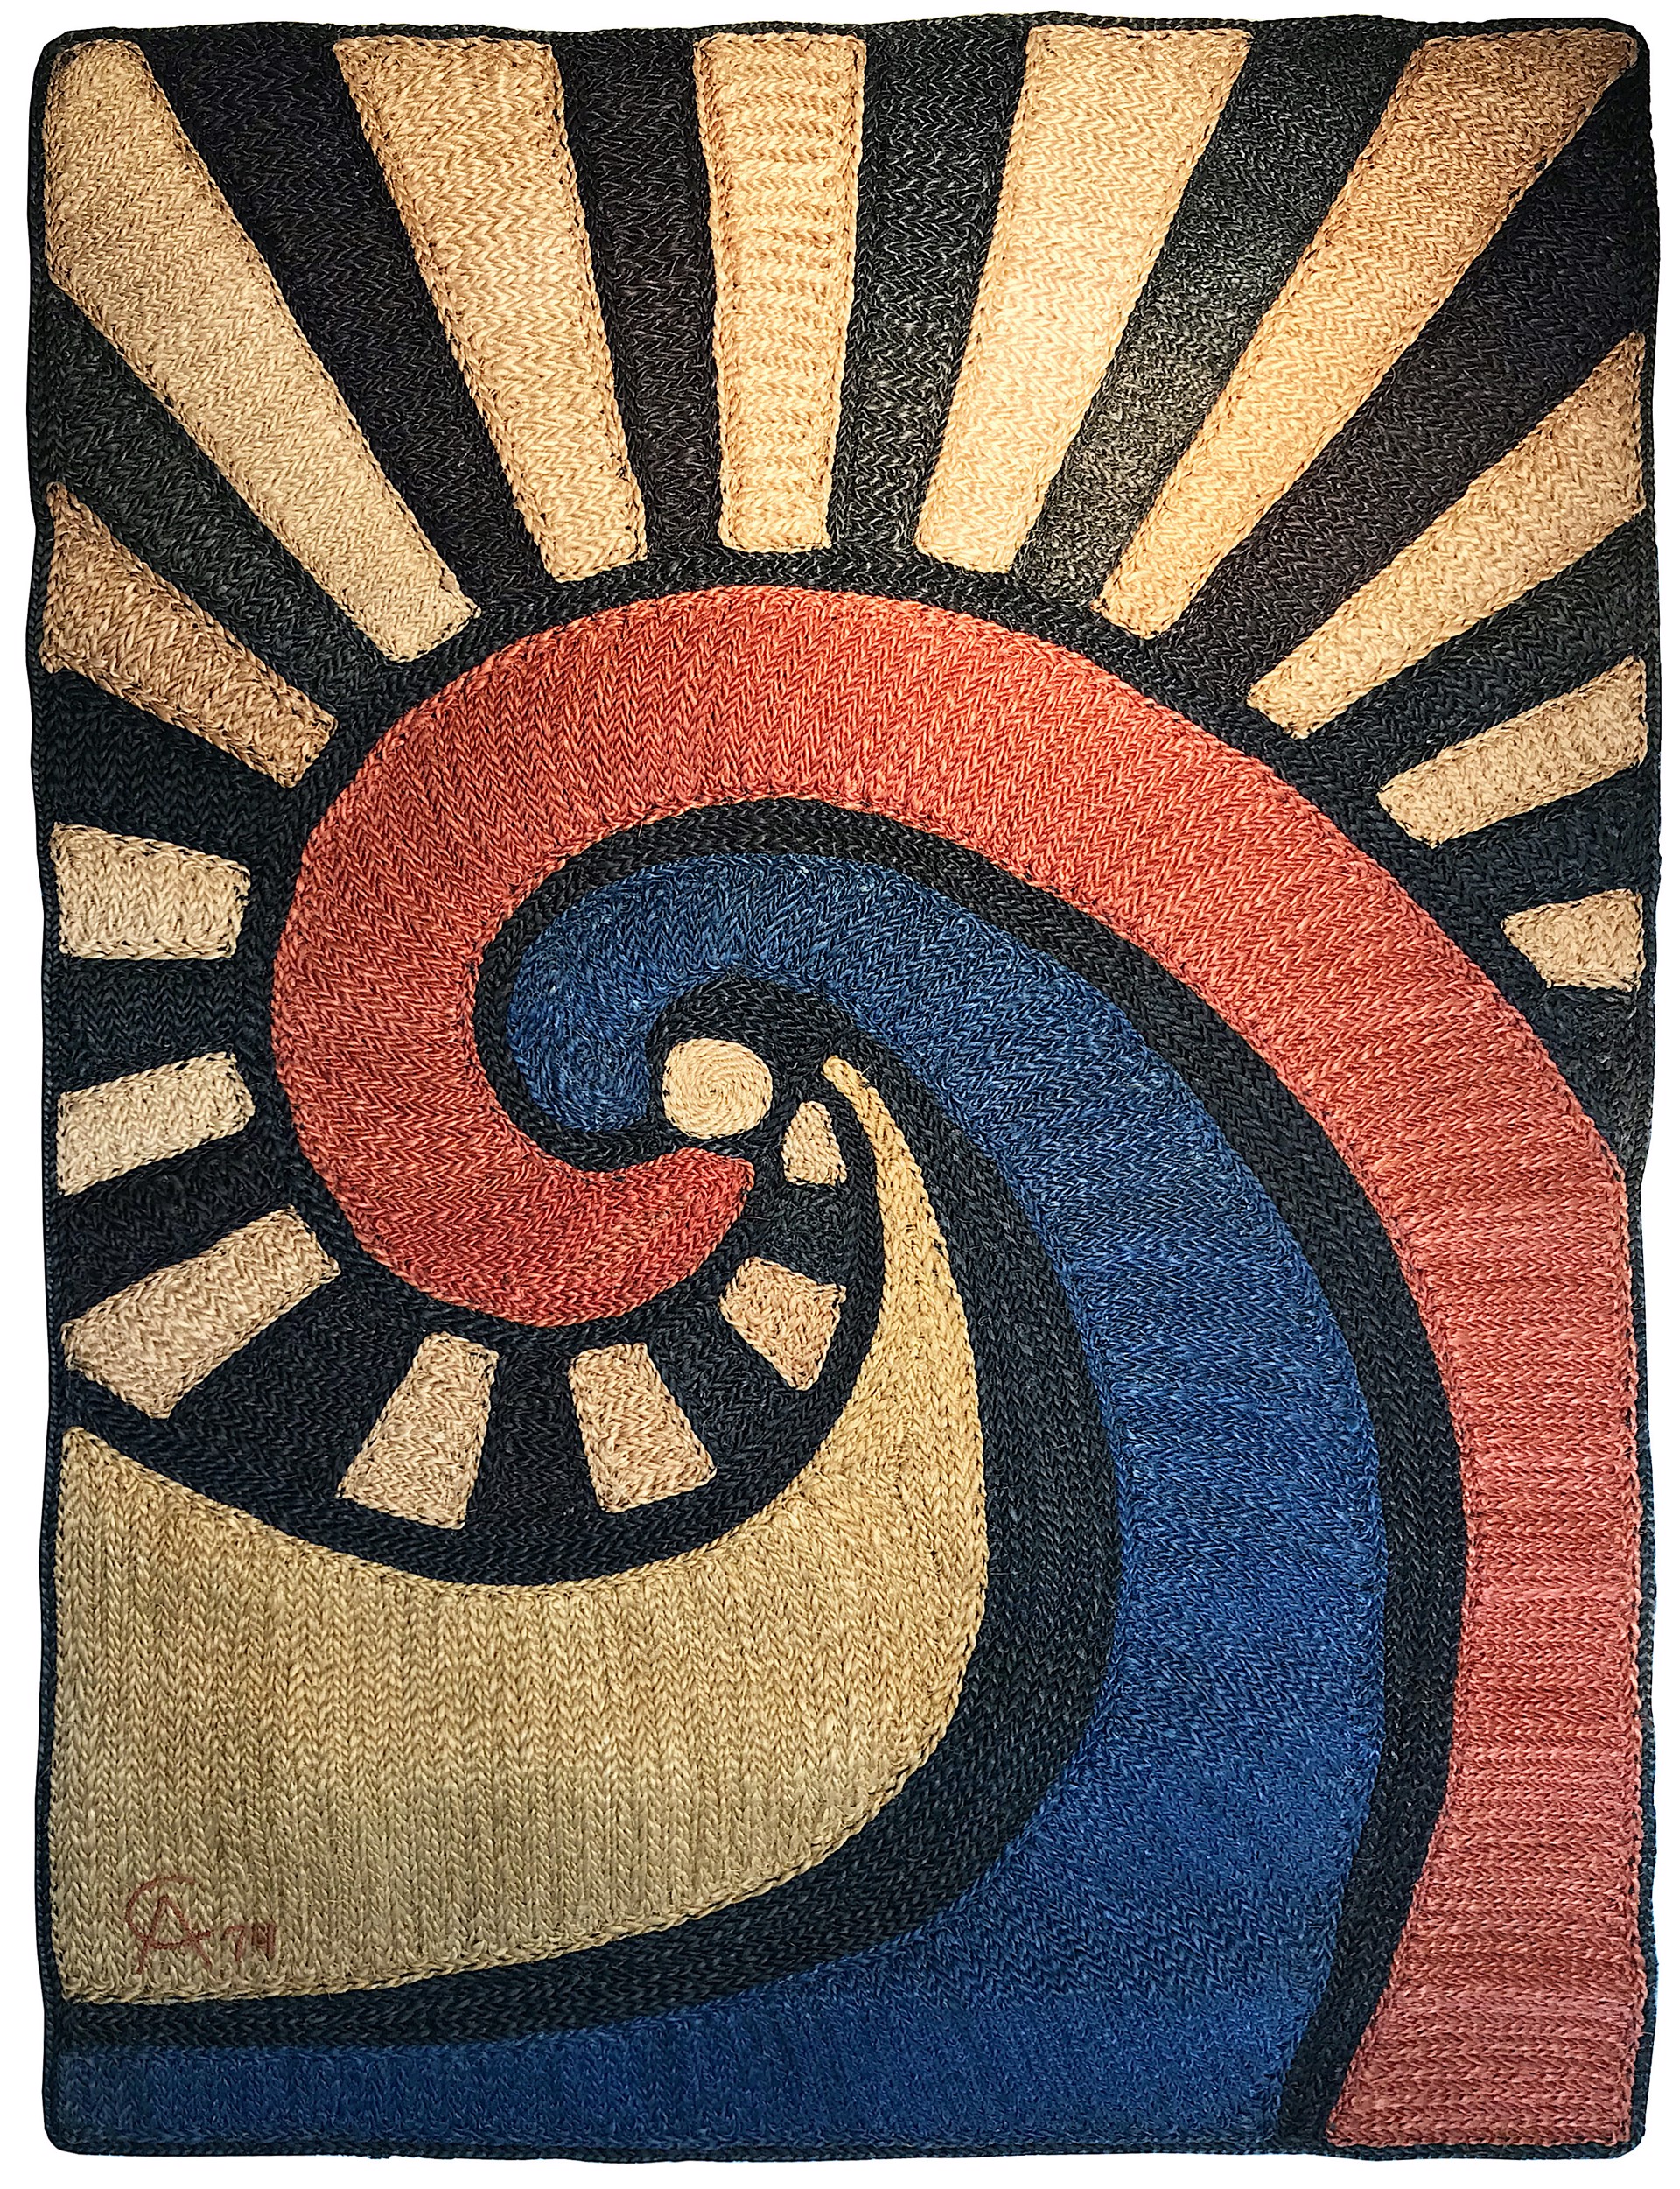 A Swirl by Alexander Calder